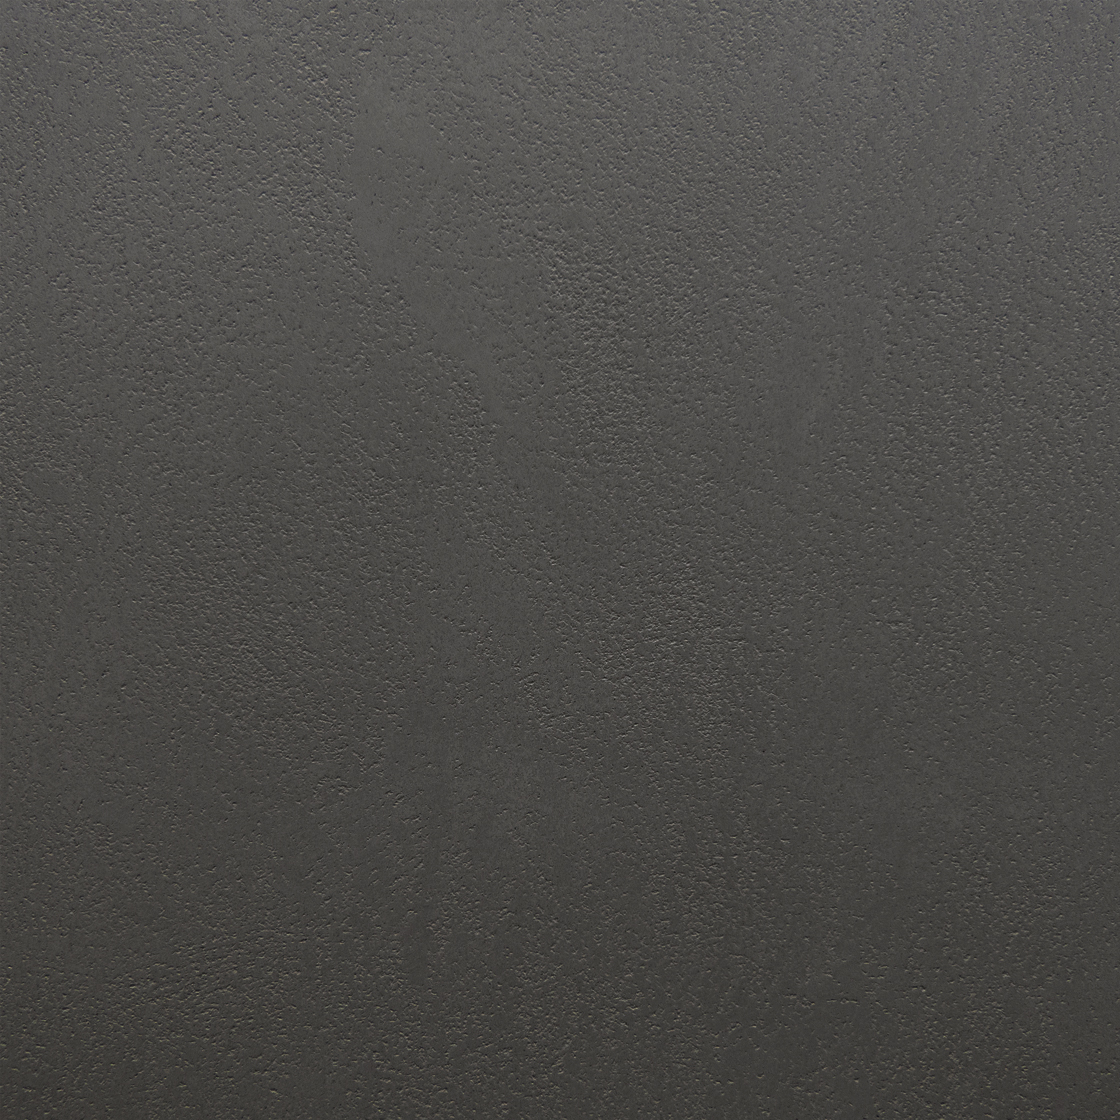 Close up of Armourcoat leatherstone exterior polished plaster finish - 45